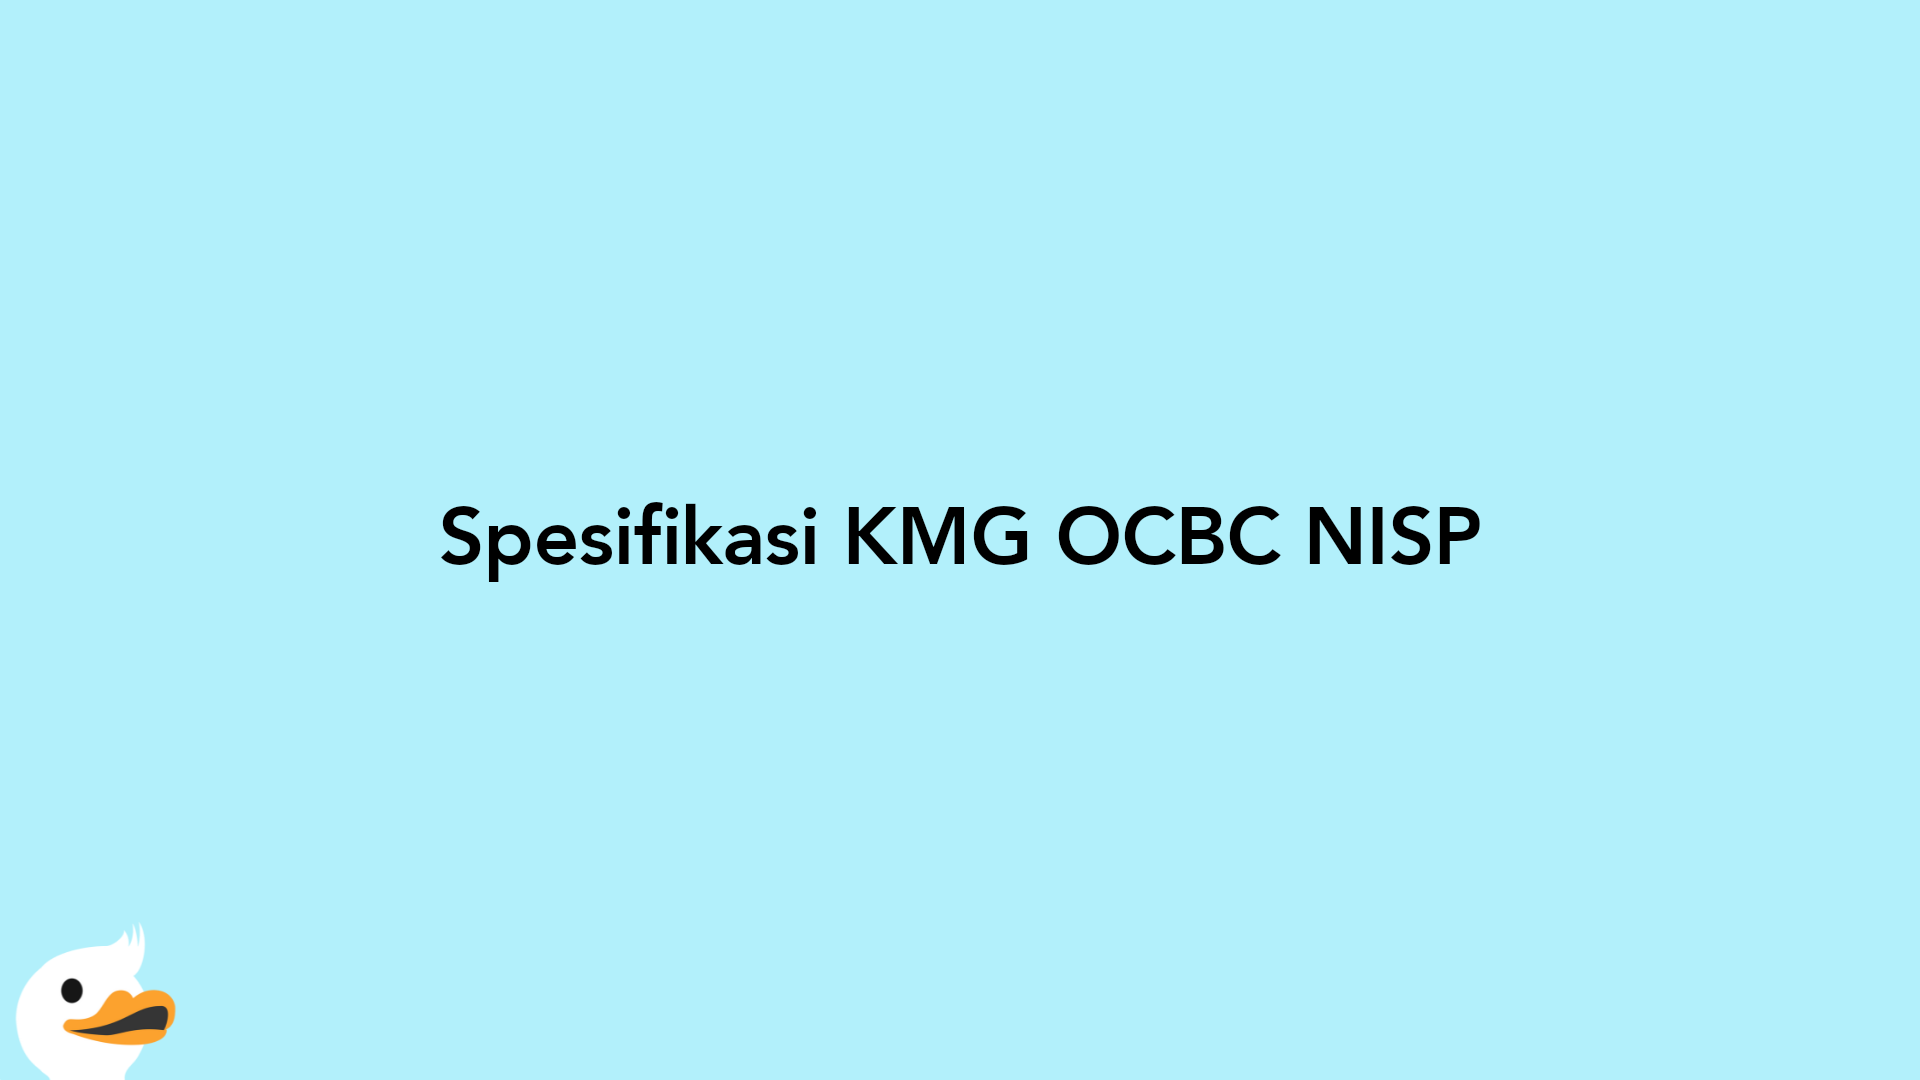 Spesifikasi KMG OCBC NISP